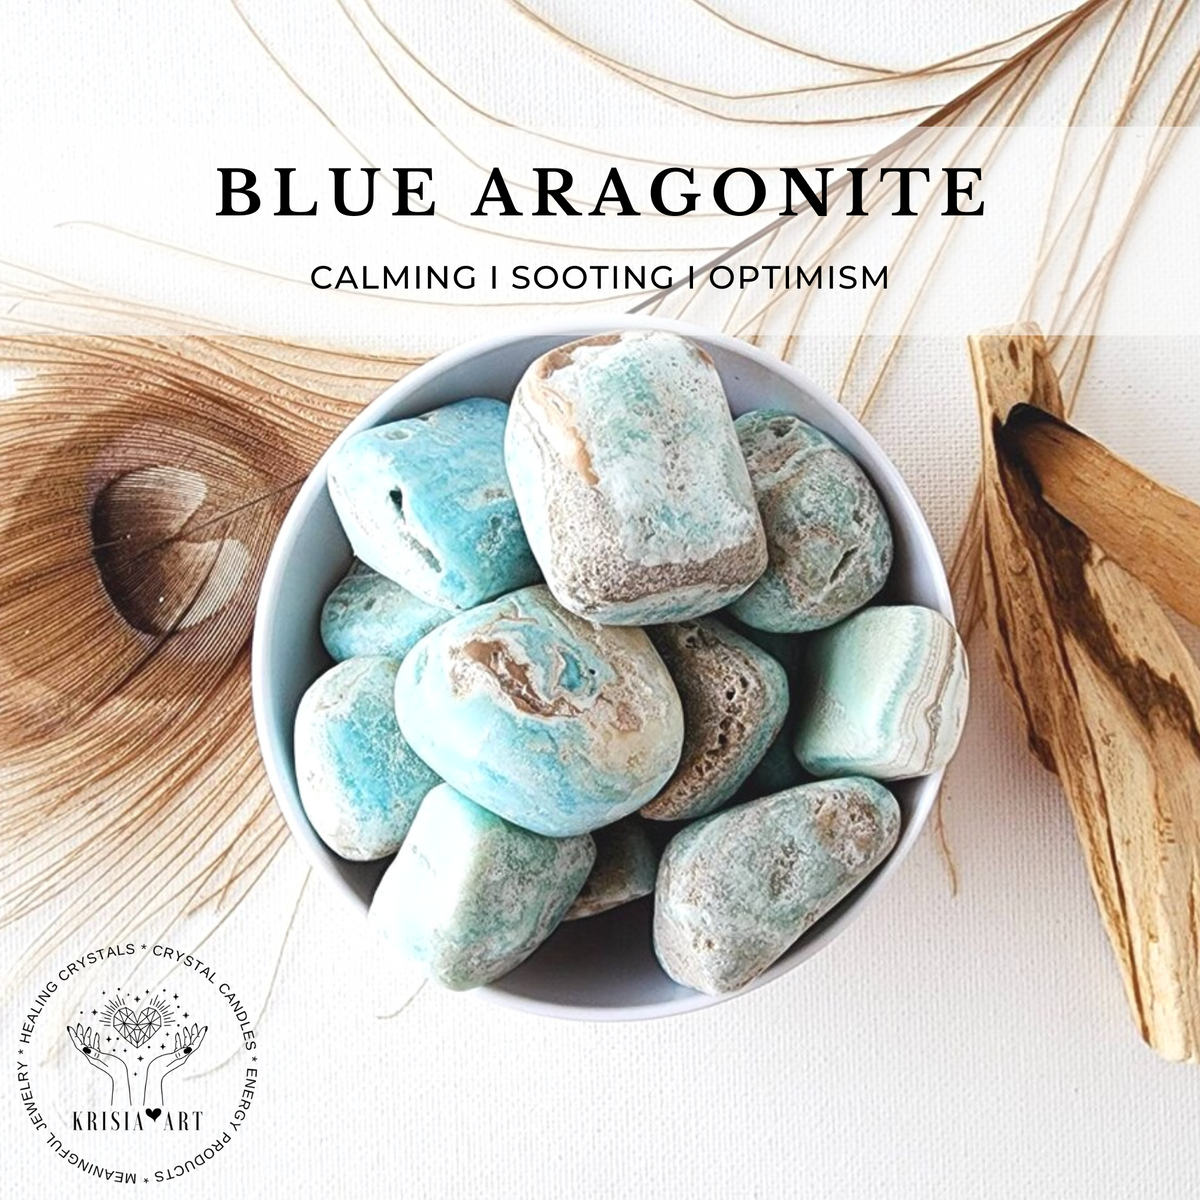 BLUE ARAGONITE tumbled crystal for calming, sooting, optimism reiki healing throat, third eye & crown chakra meditation